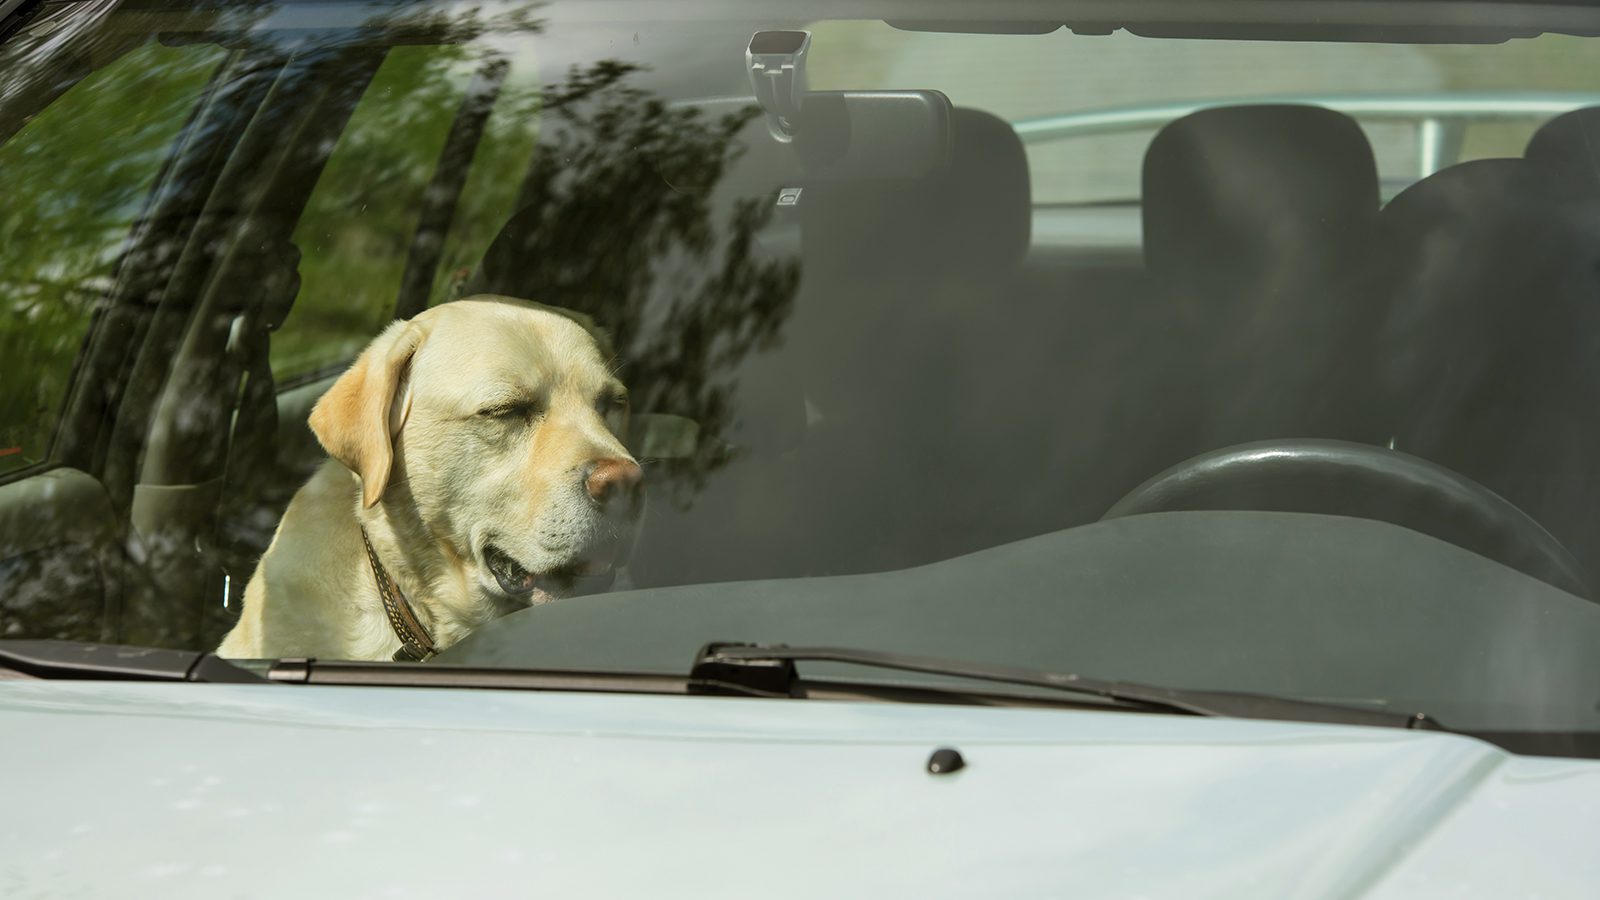 PETA Warns Against Leaving Dogs in Hot Cars